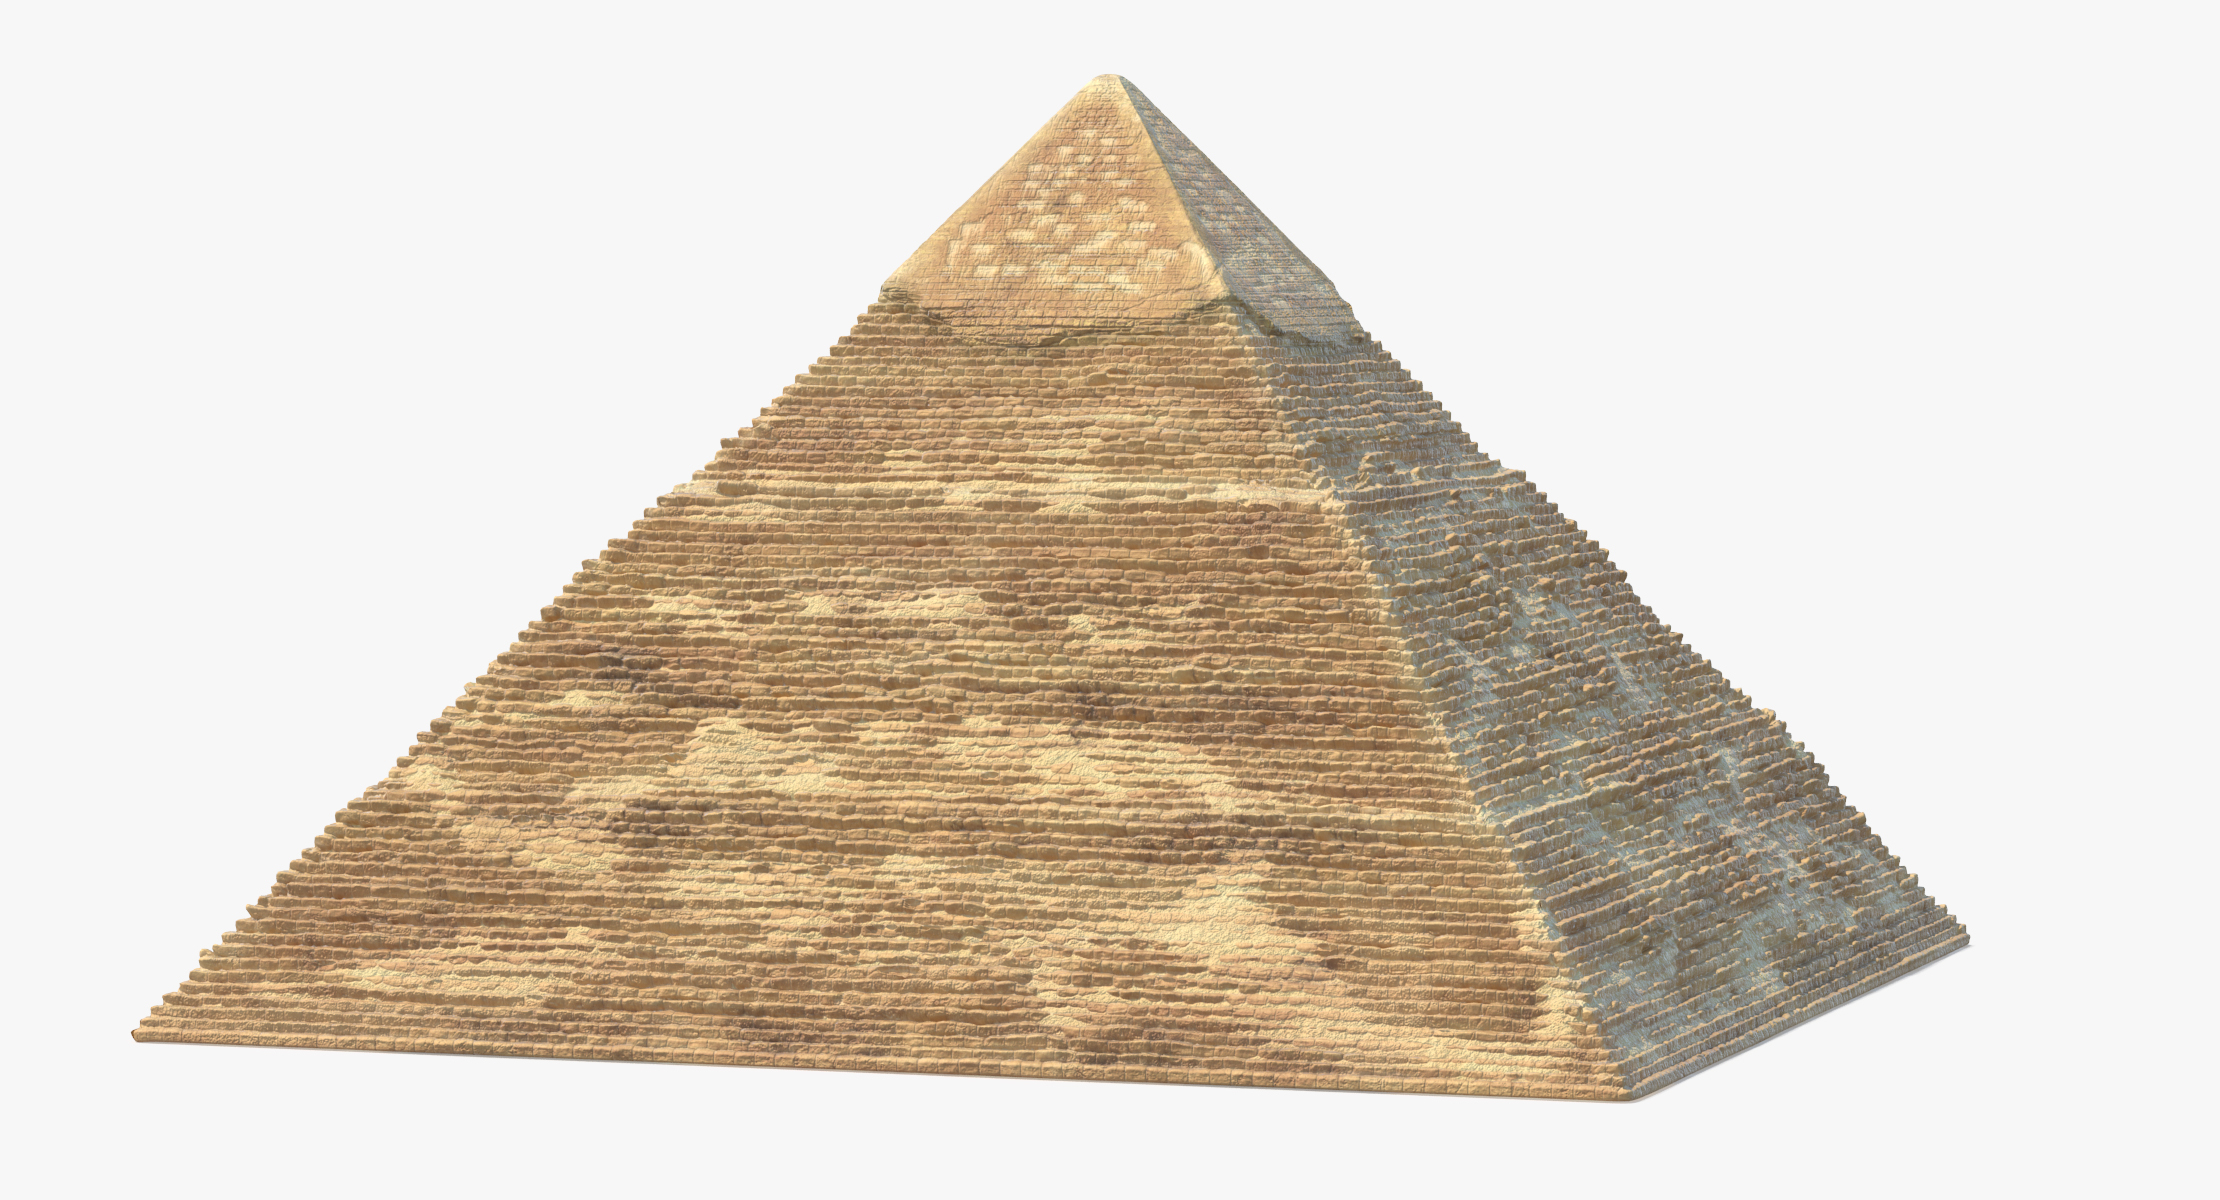 Т д пирамида. Пирамида Хеопса 3д. 3д модель пирамиды Хеопса. Пирамида Хеопса 3d модель. Египетская пирамида 3д модель.